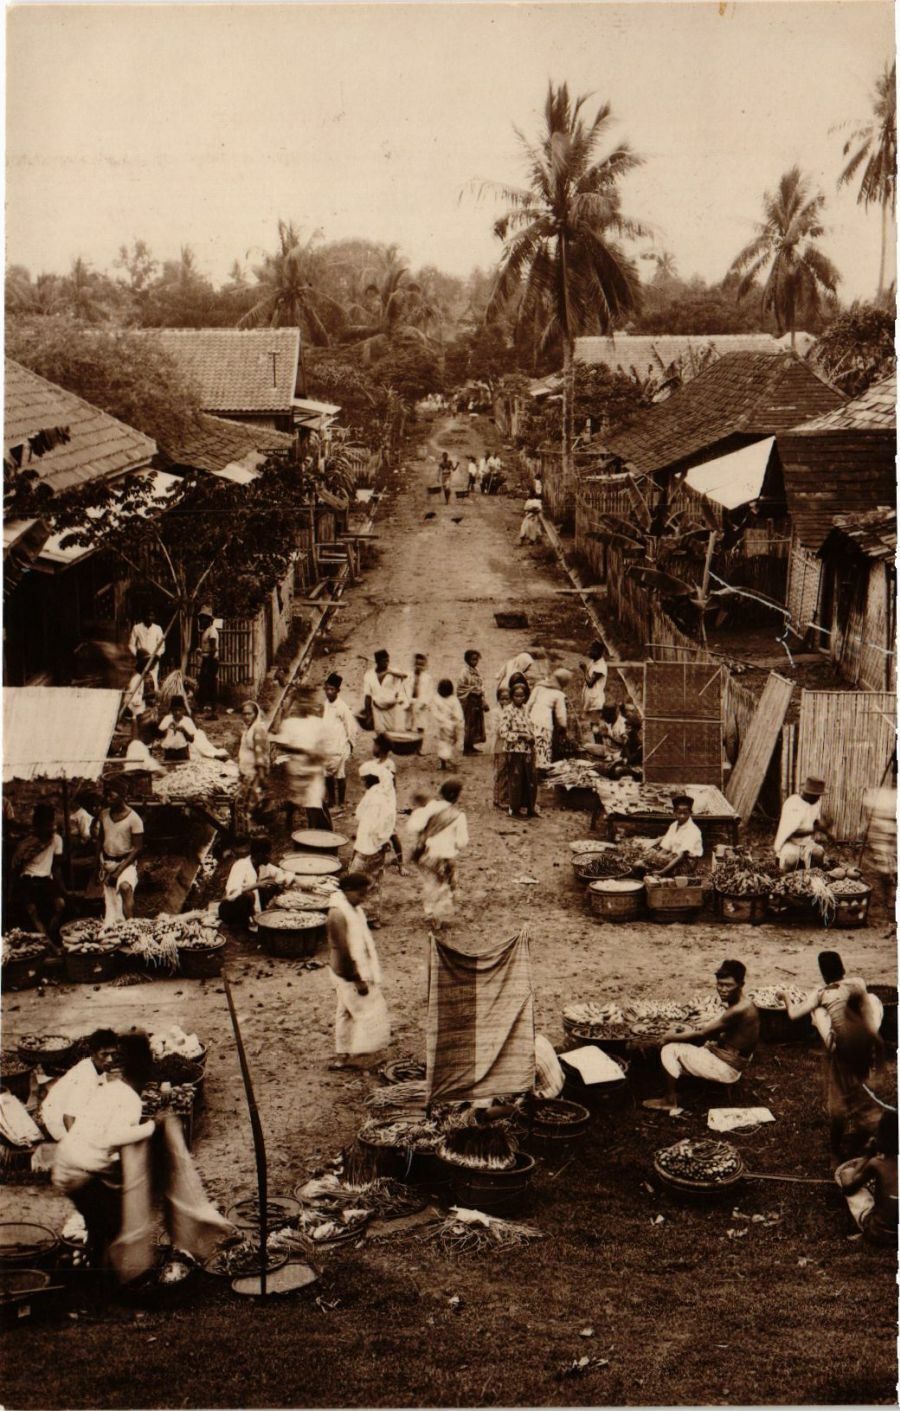 PC CPA market scene real photo postcard INDONESIA (a14960)